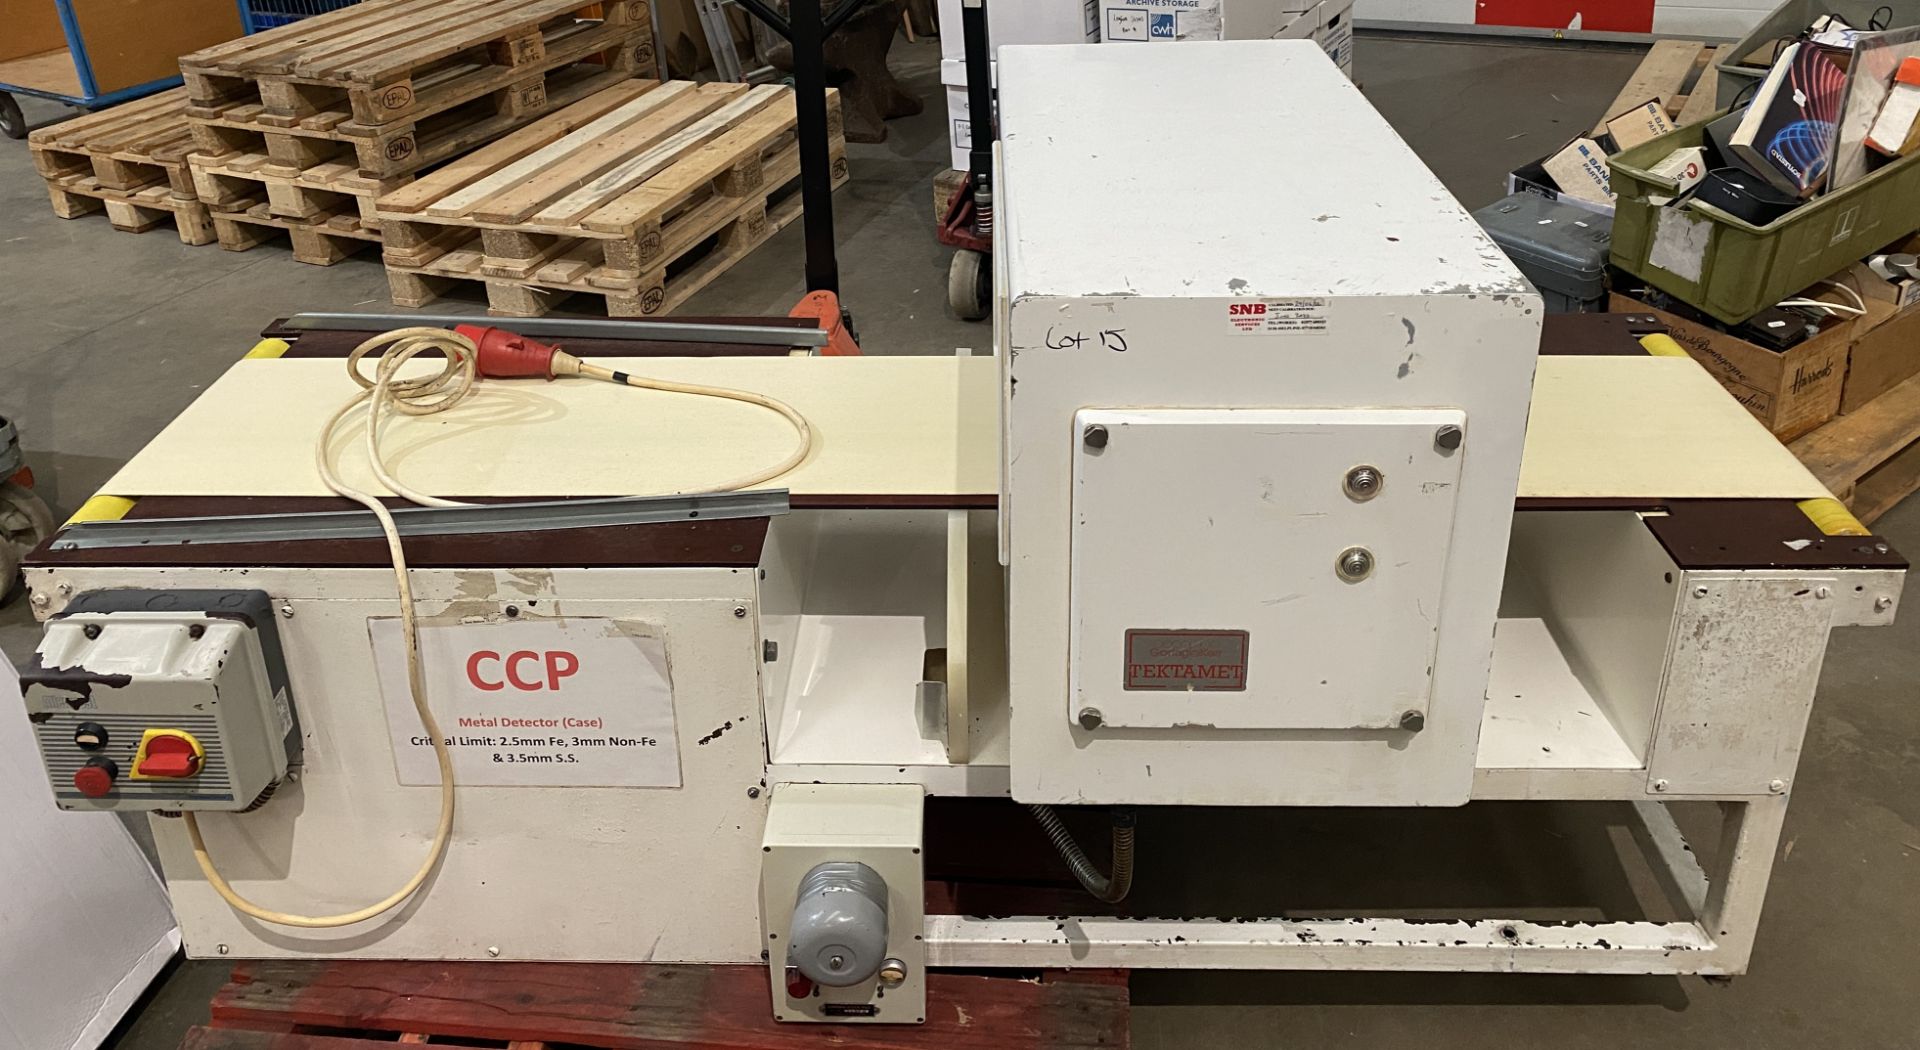 Goring Kerr Tektamet CCP conveyor fed metal detector unit - Last calibrated 24/06/22 - roller width